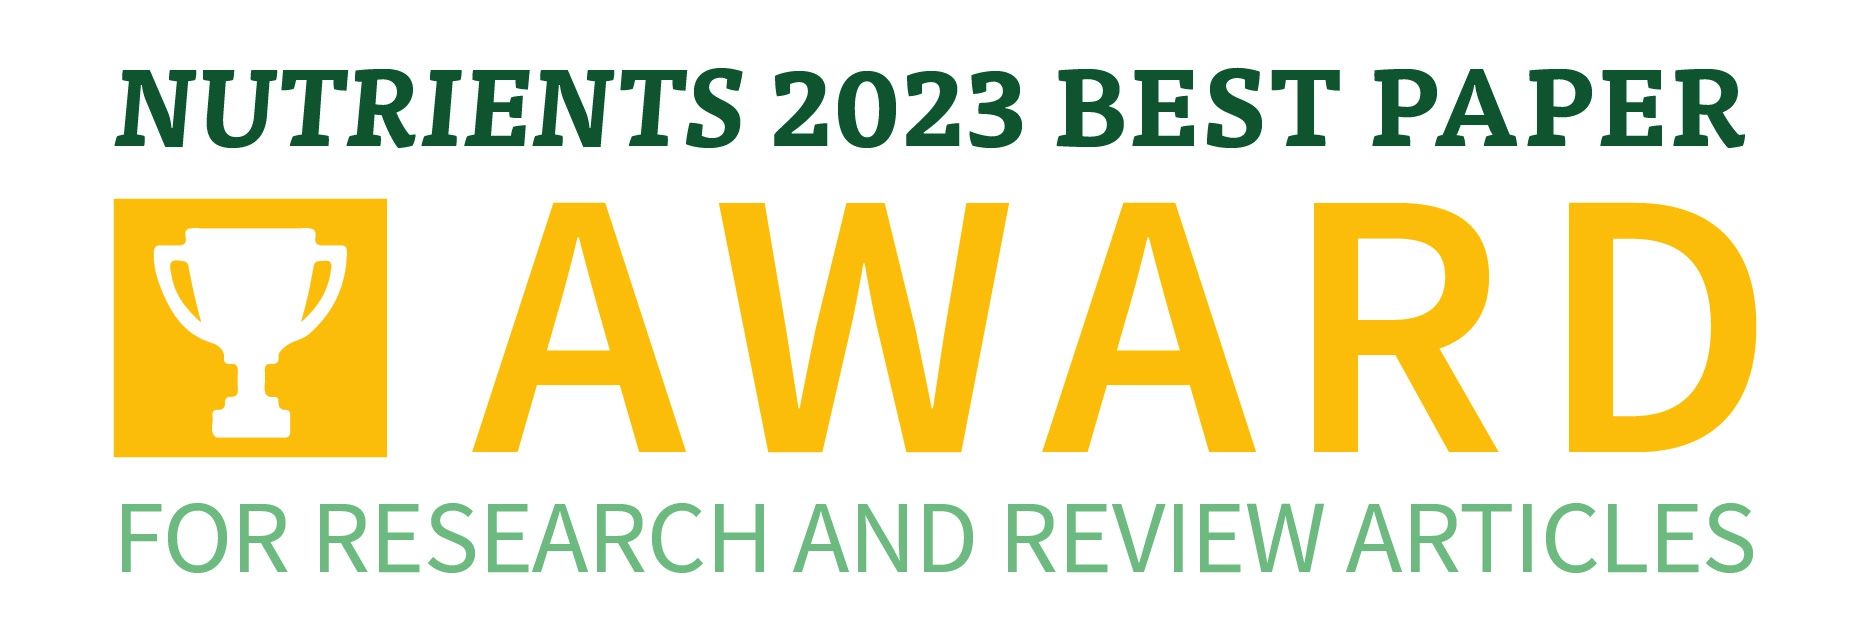 Nutrients 2023 Best Paper Award